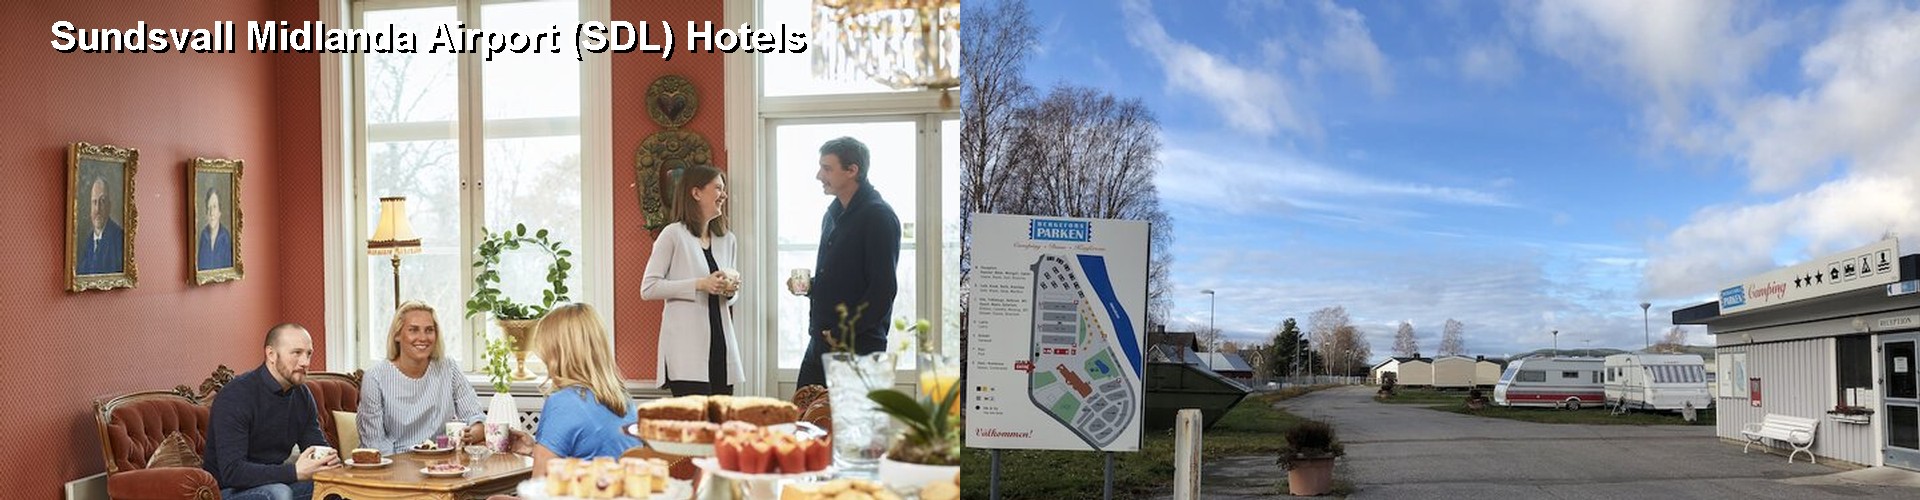 4 Best Hotels near Sundsvall Midlanda Airport (SDL)